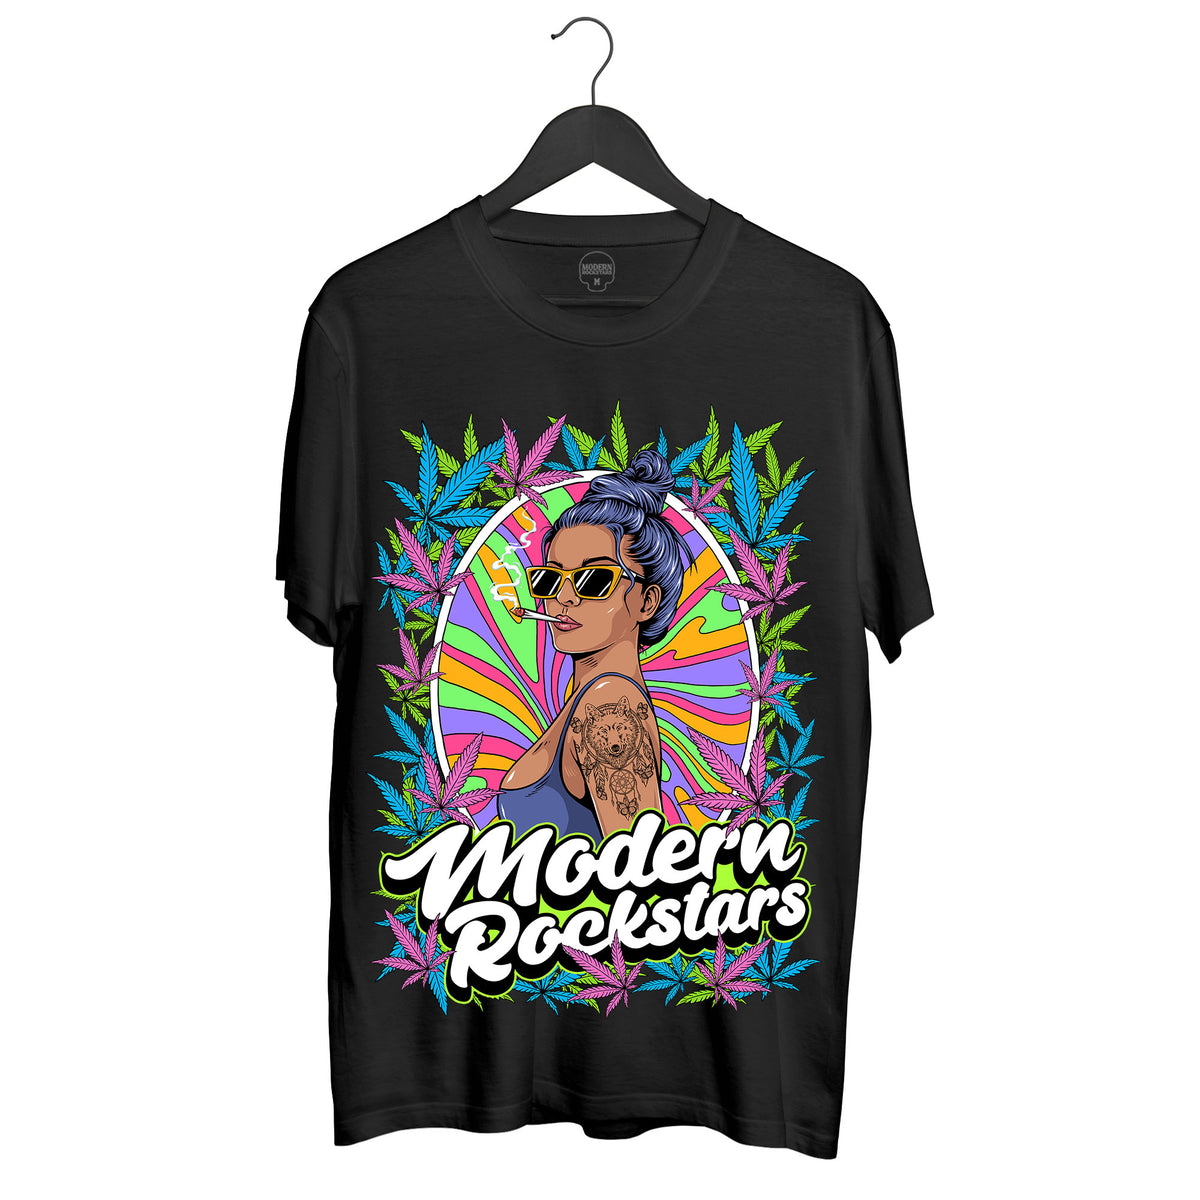 Mary Jane T-shirt - Modern Rockstars